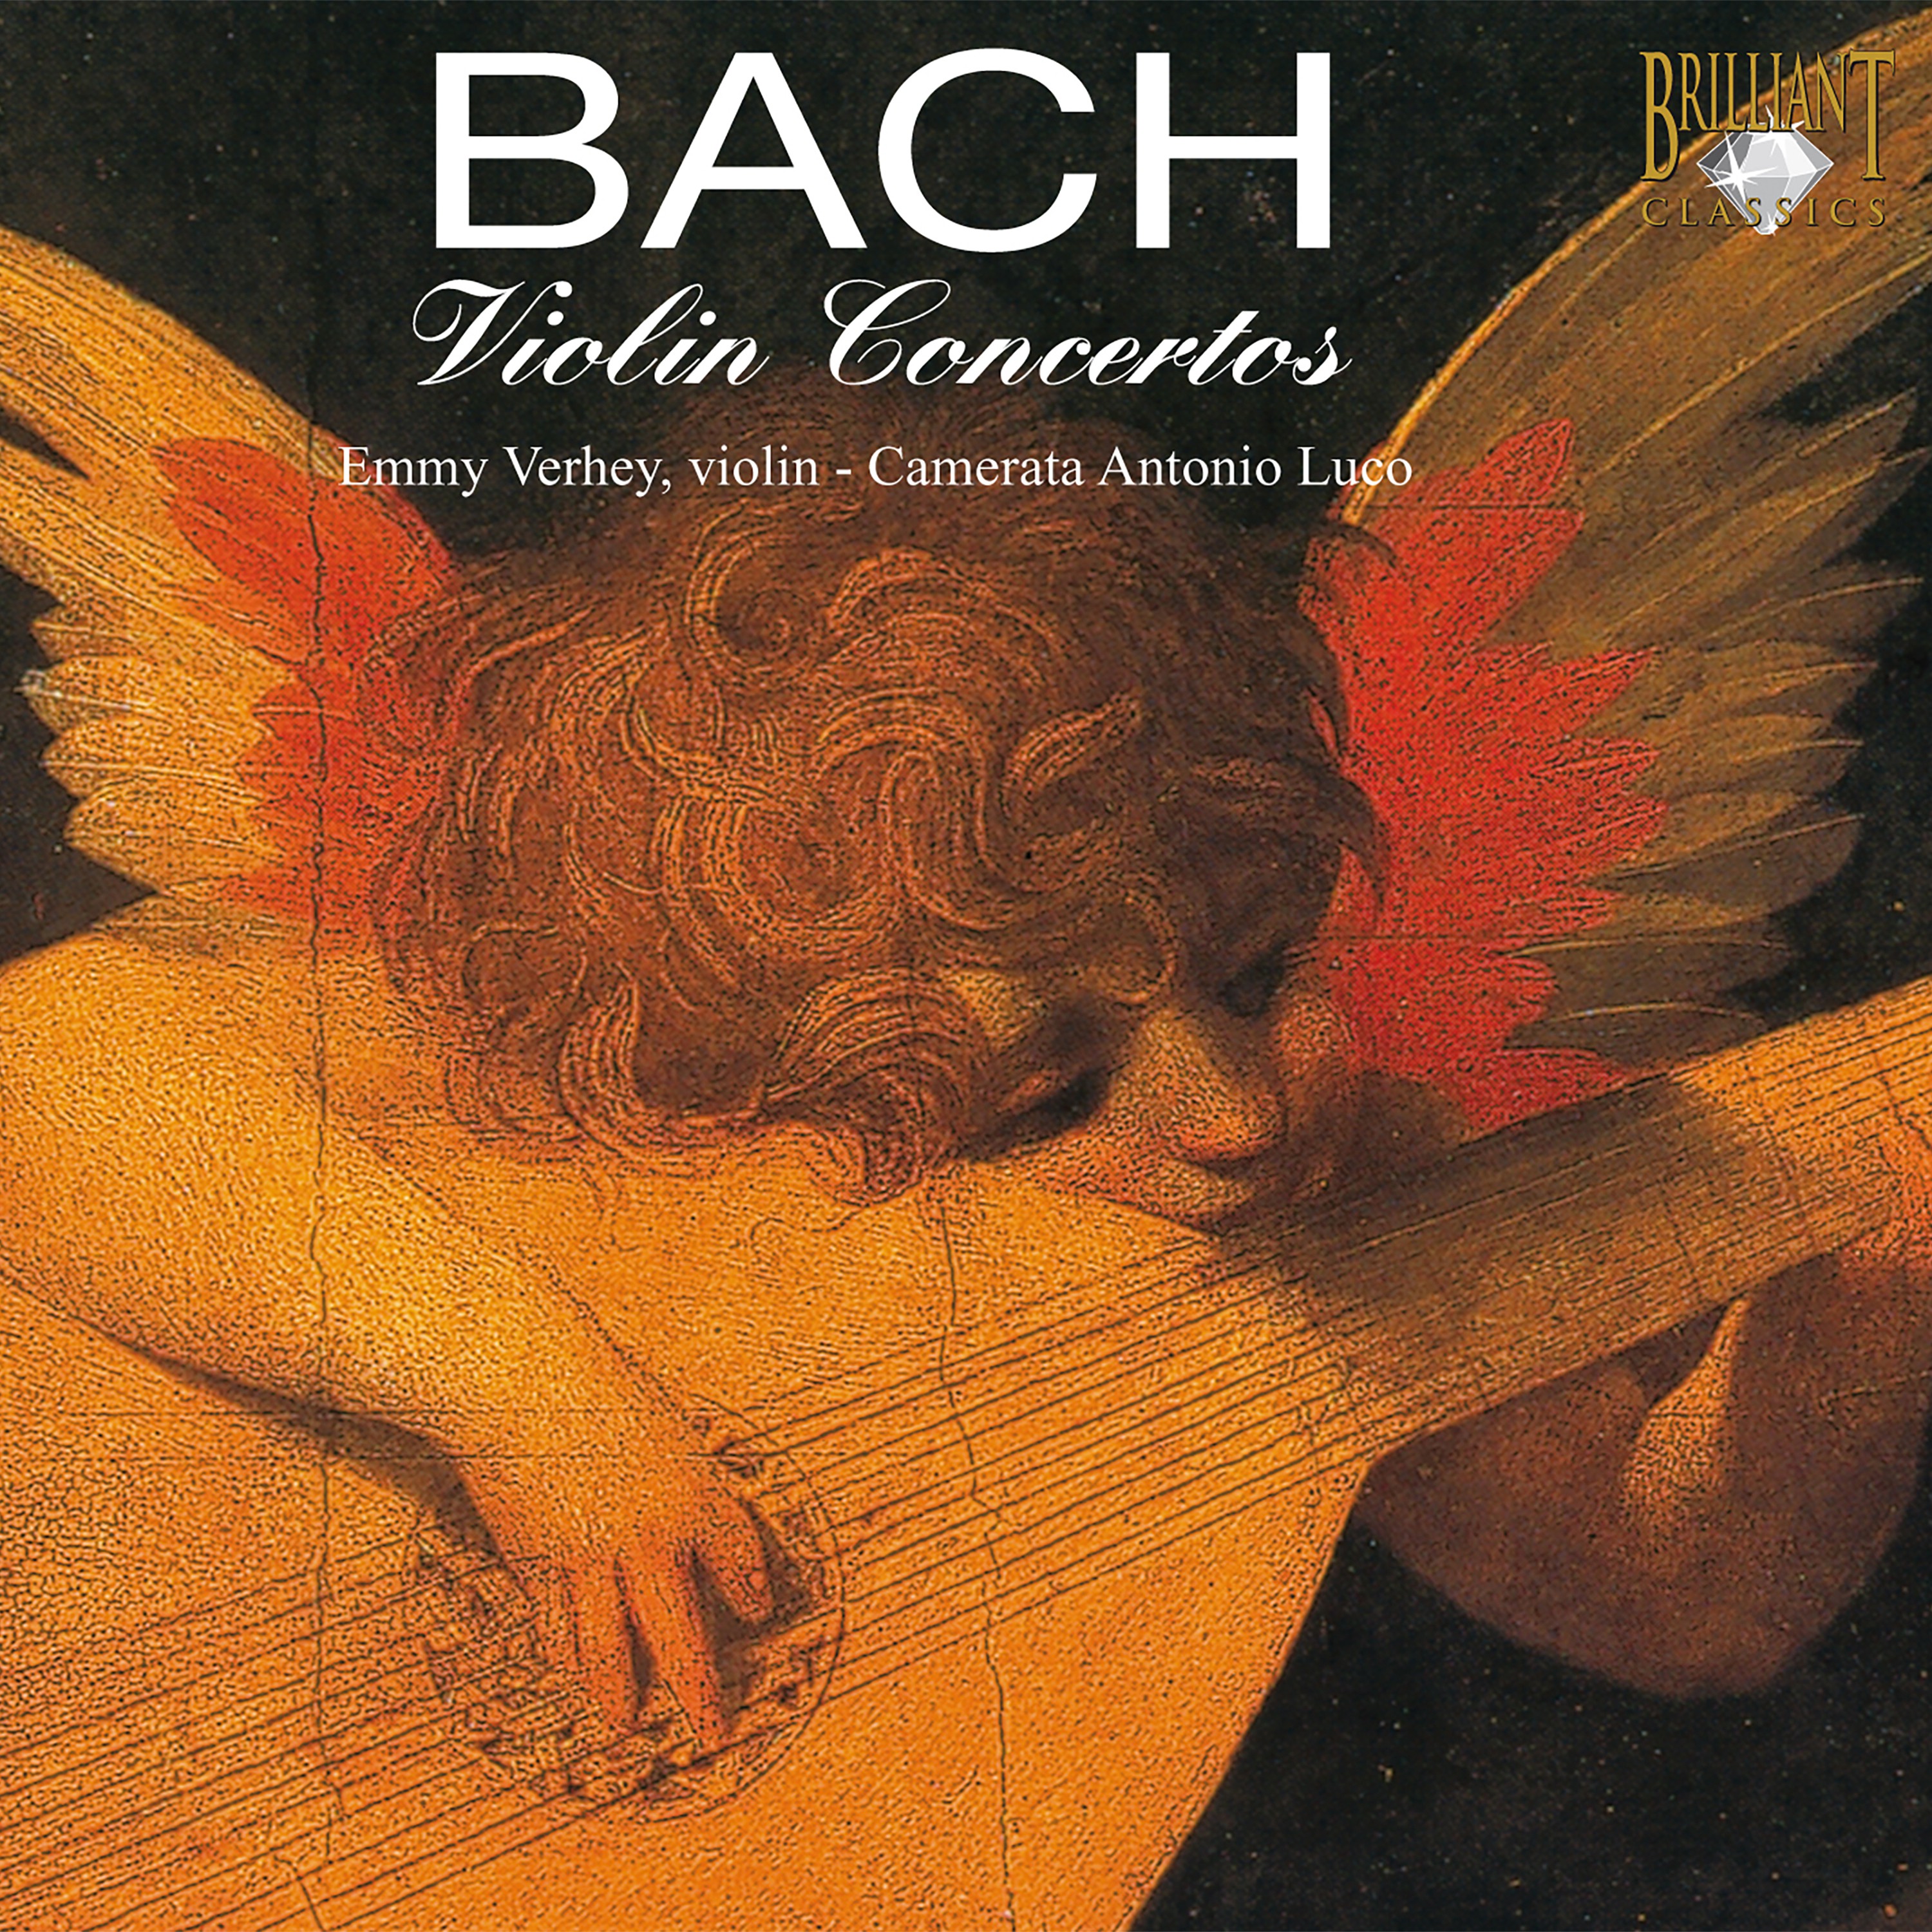 Violin Concerto in D Minor, BWV 1052: Allegro